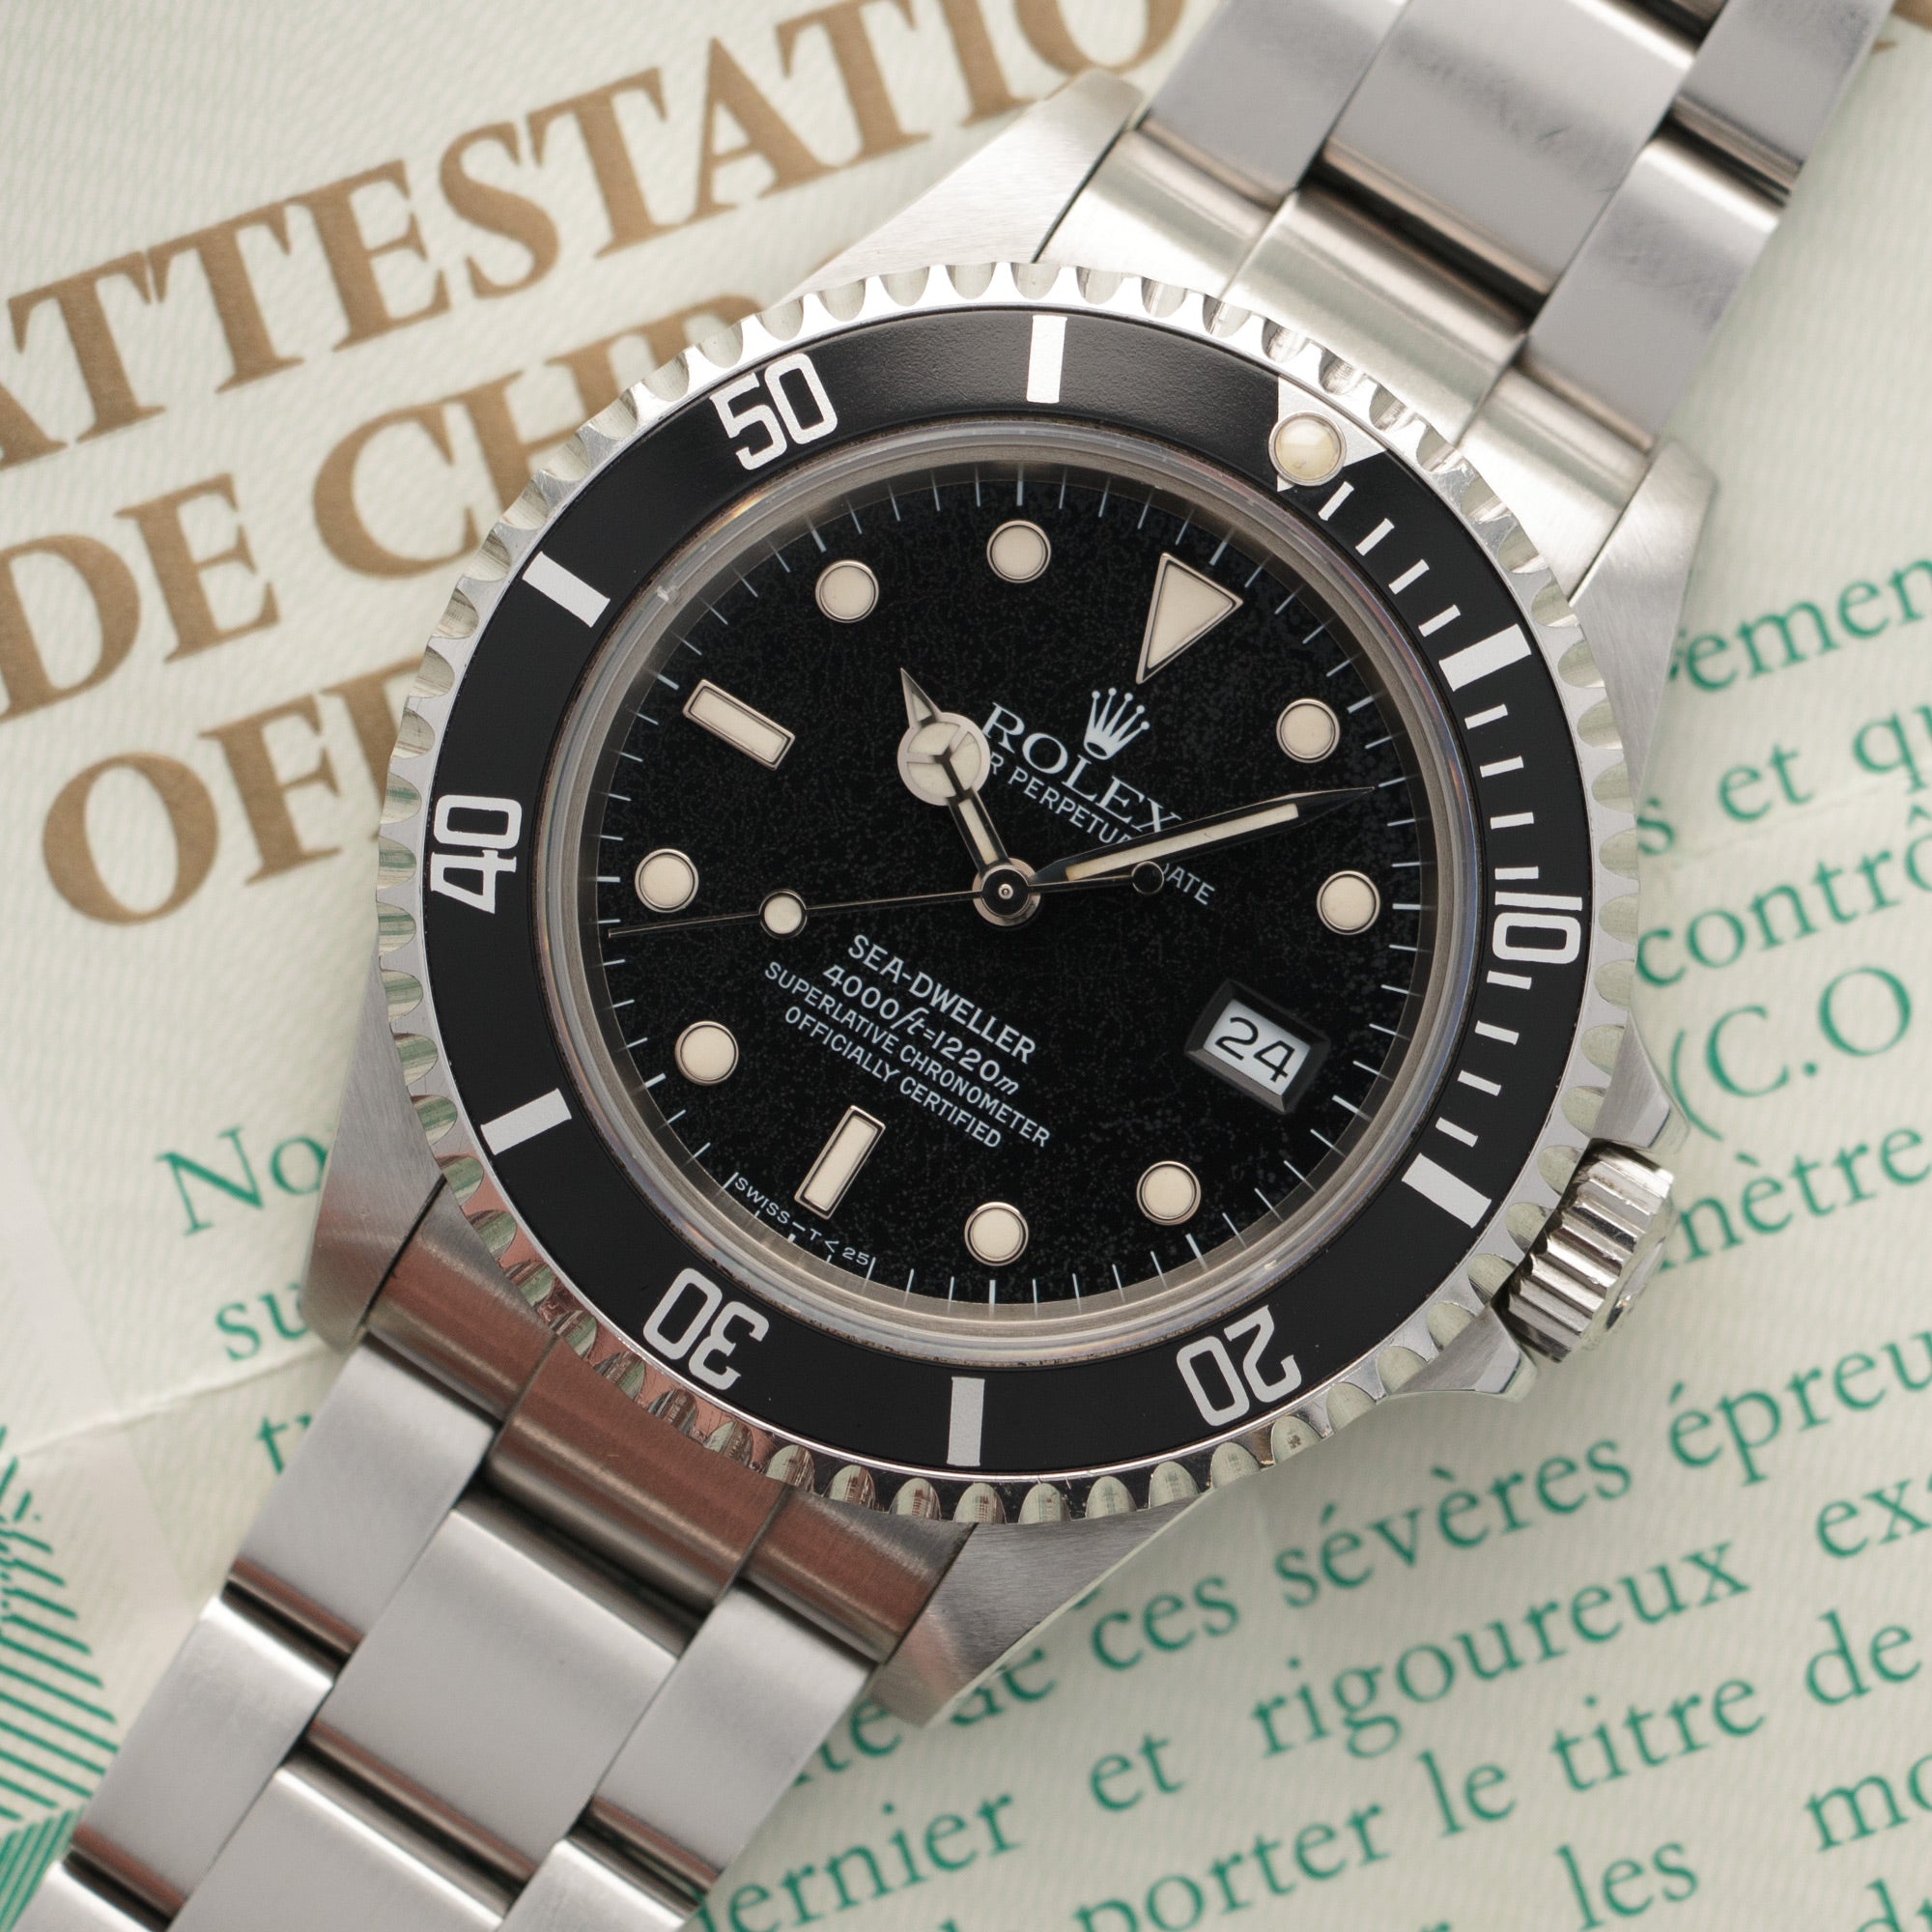 Rolex - Rolex Sea-Dweller Watch Ref. 16660, with Original Warranty Paper - The Keystone Watches